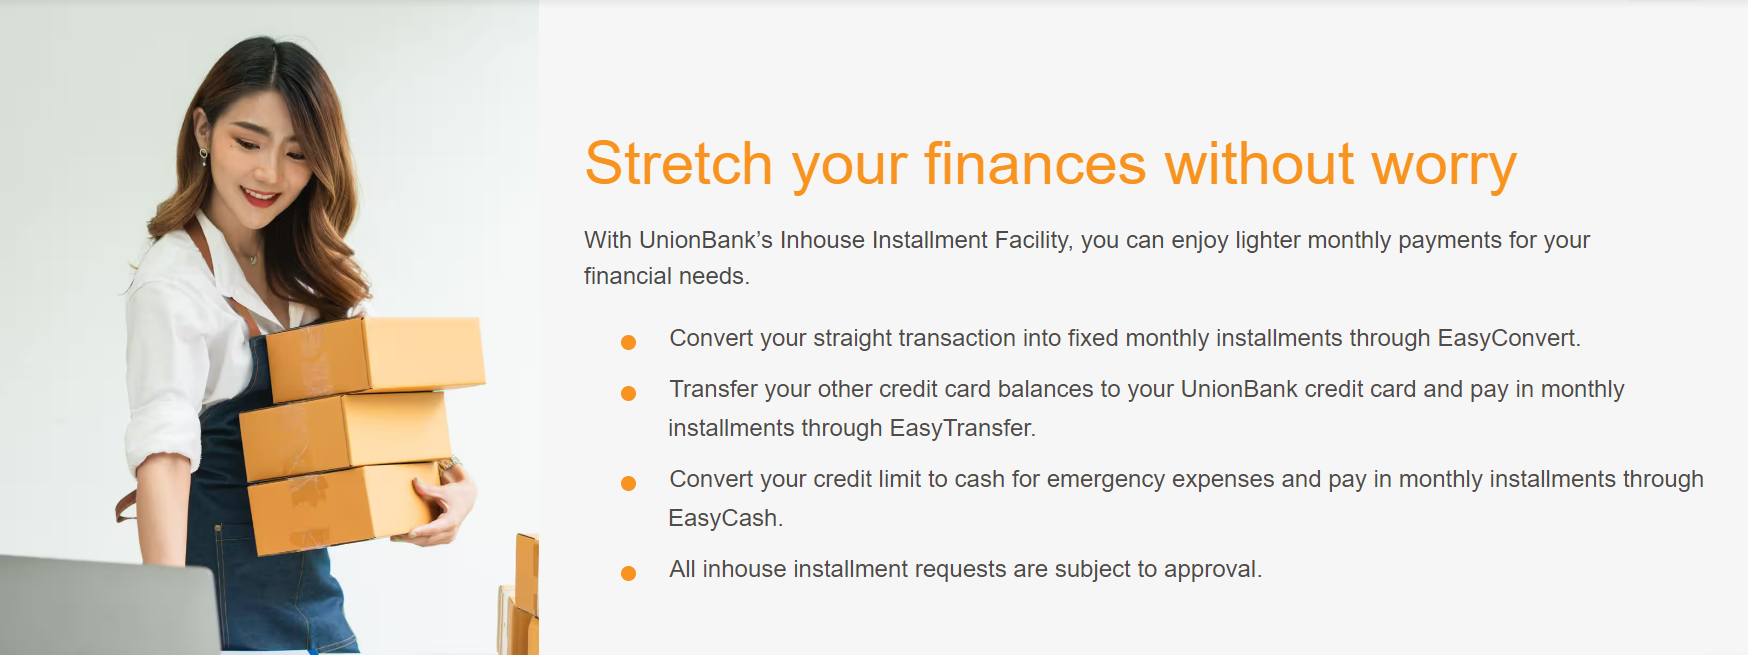 credit card installment - unionbank inhouse installment